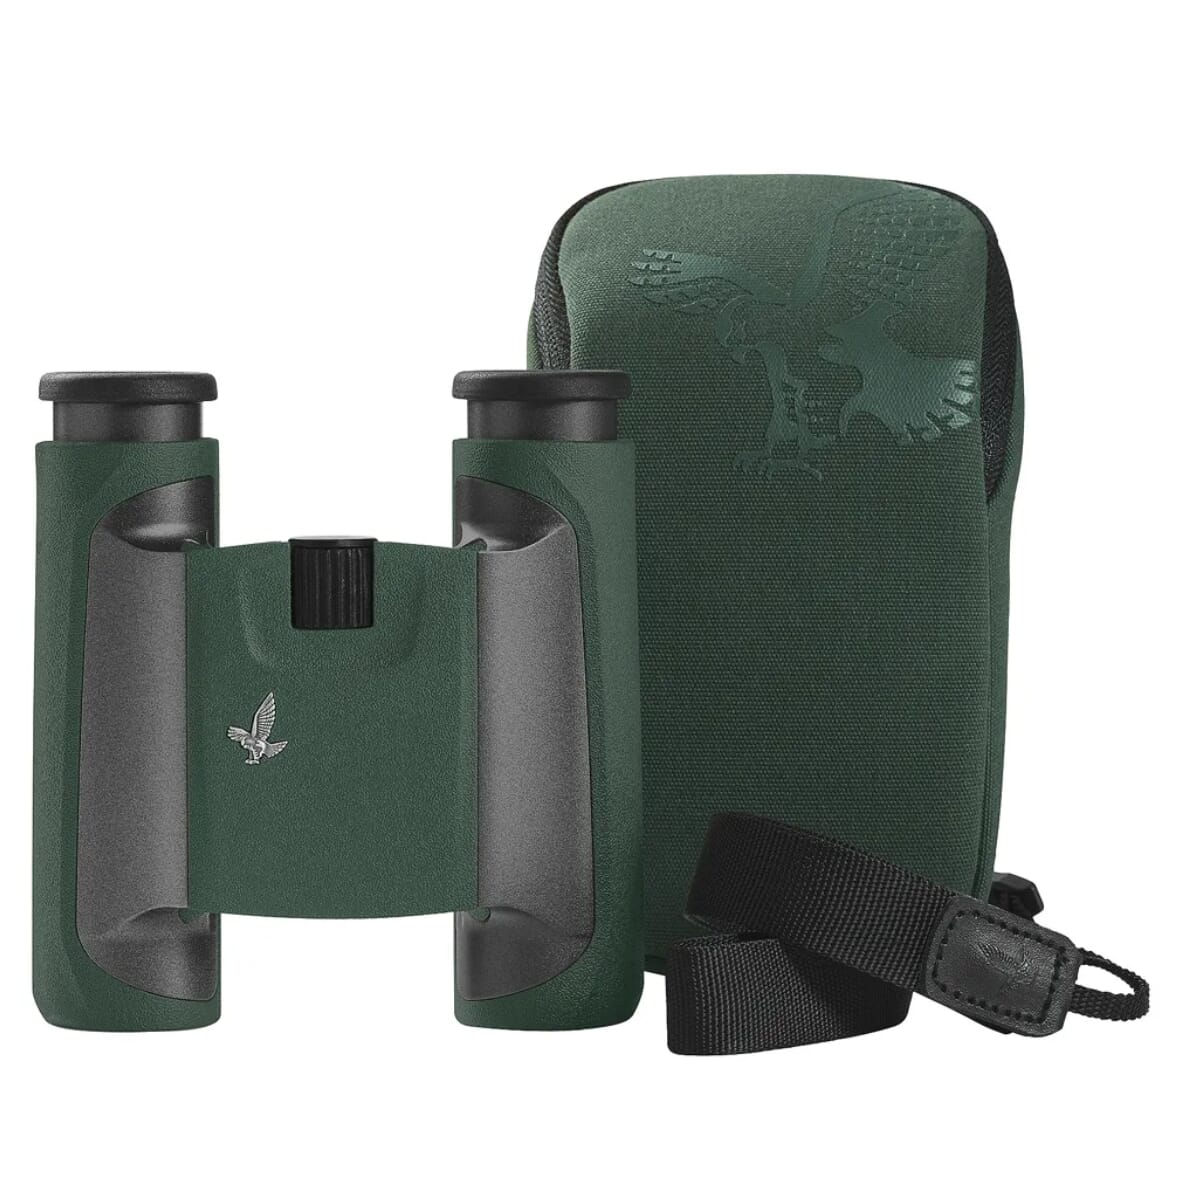 Swarovski CL Pocket 10x25 Green Wild Nature Binocular w/ Field bag 46154